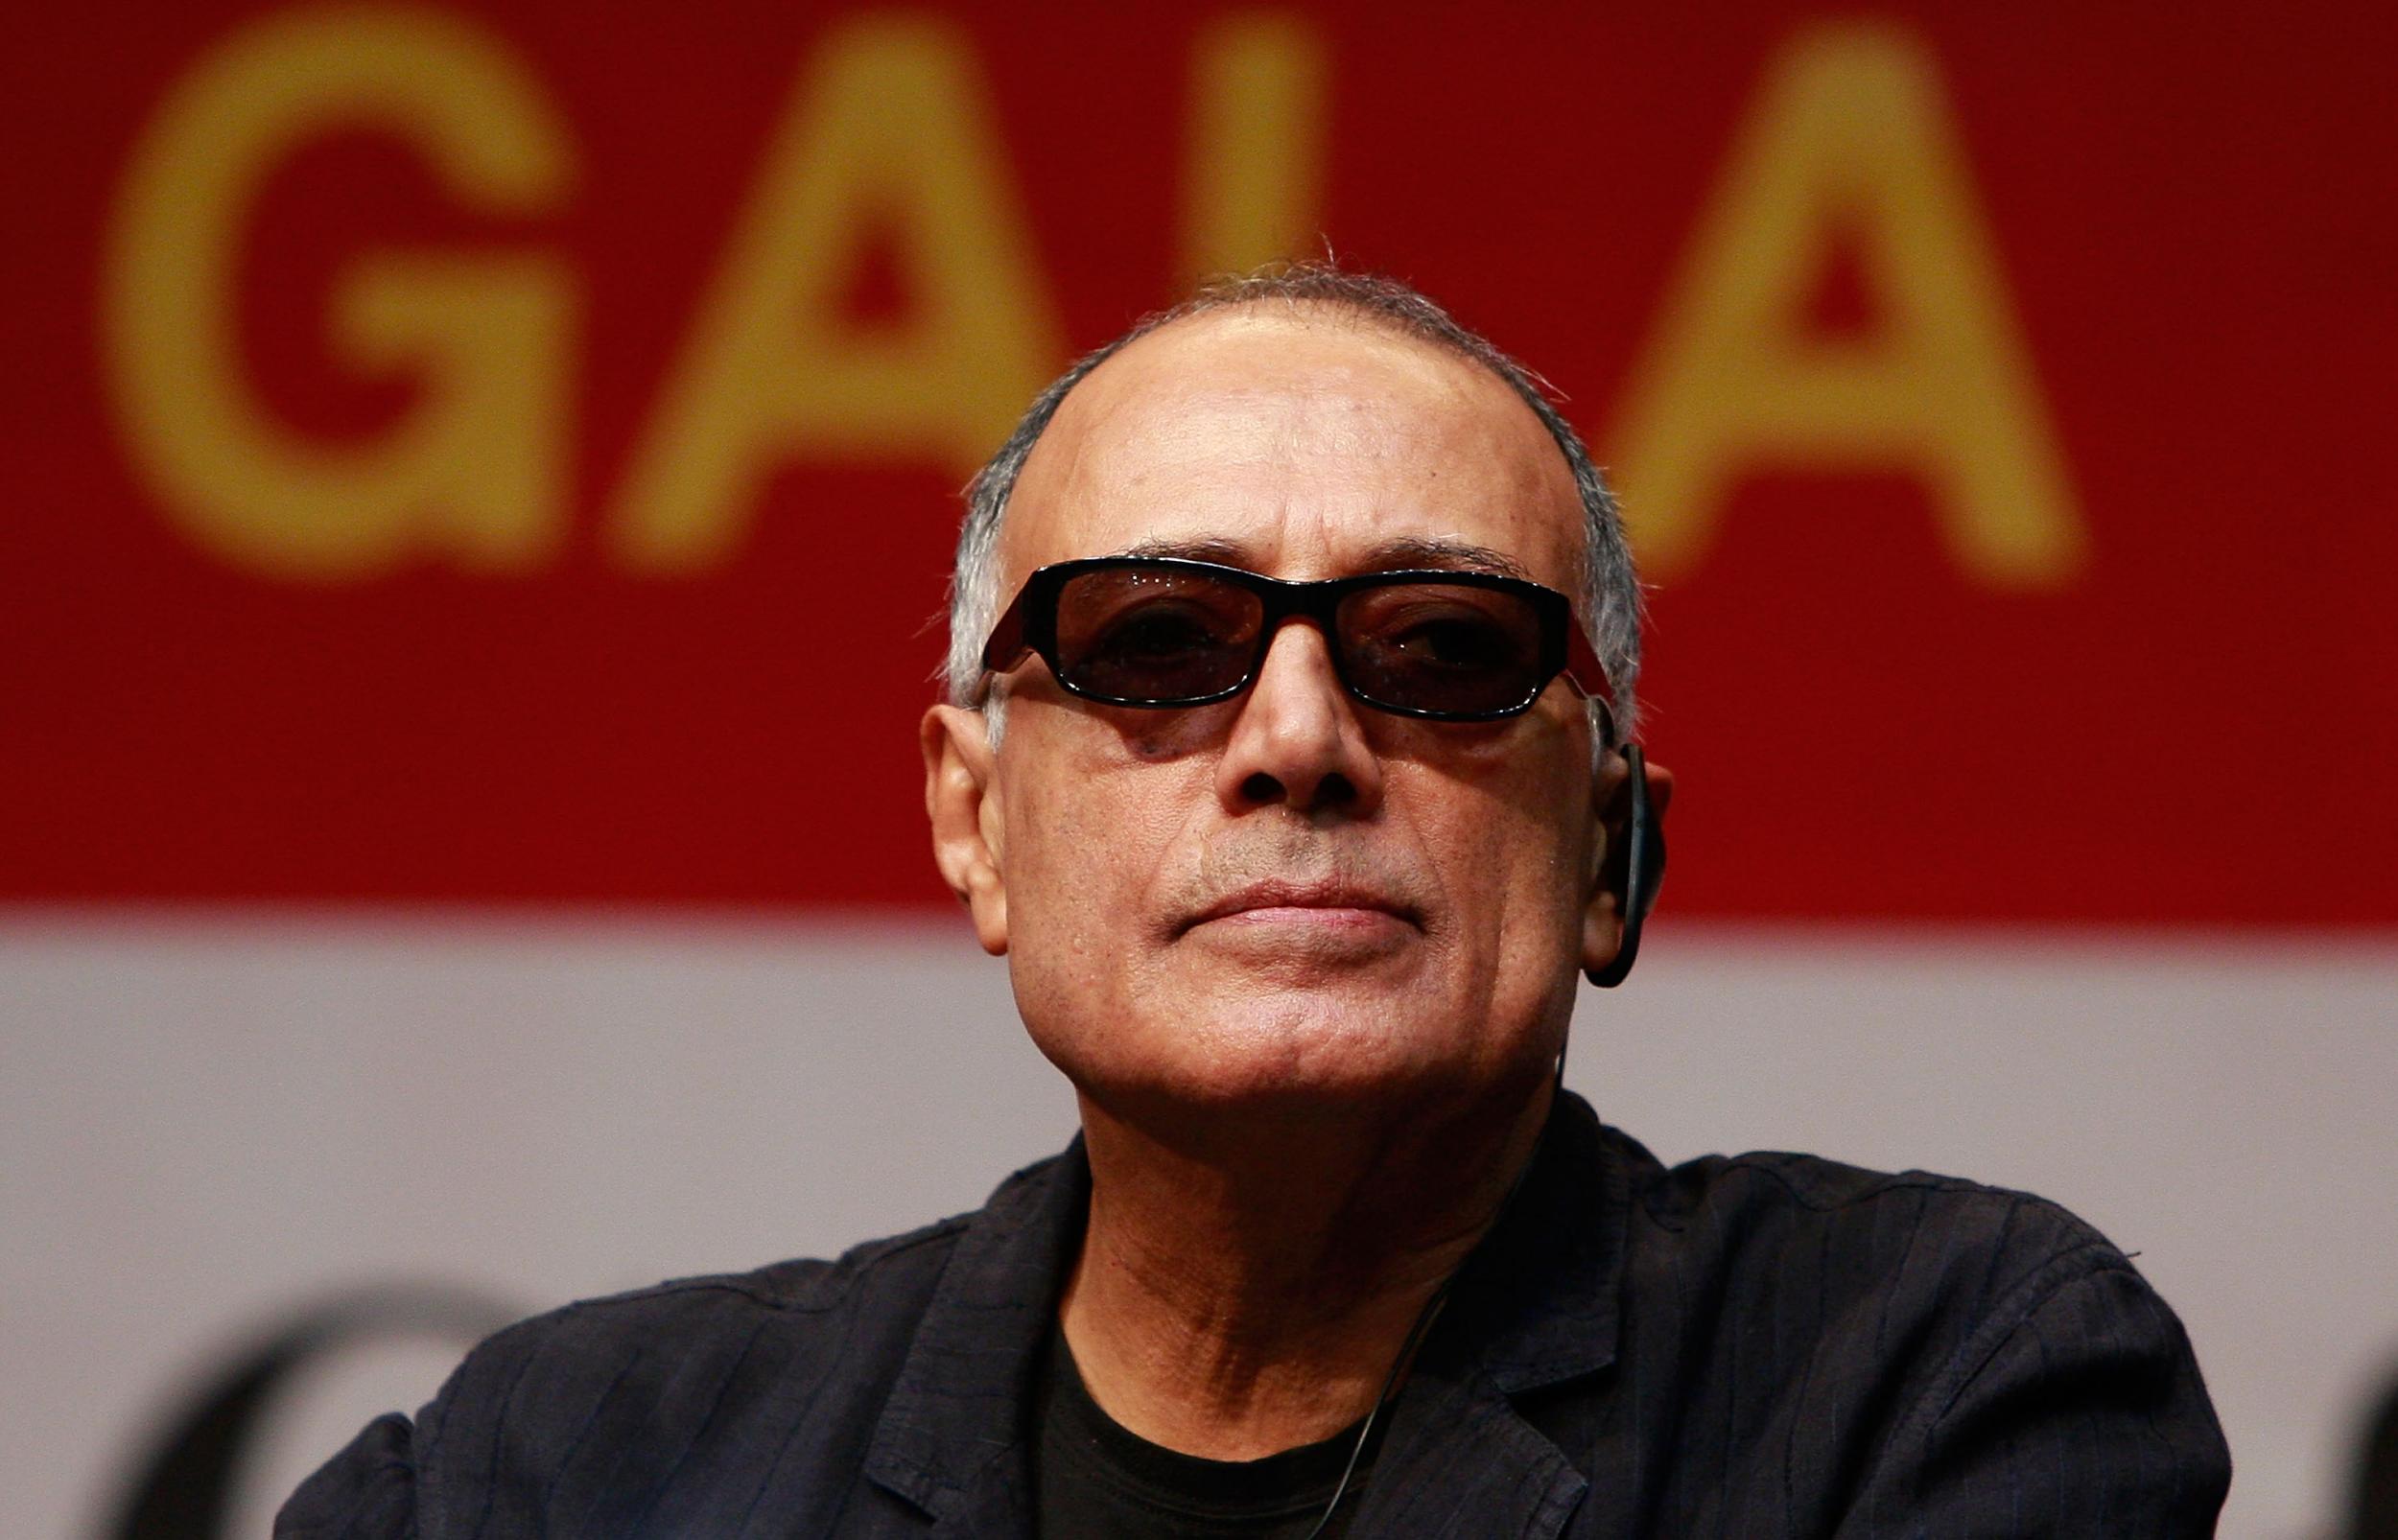 Abbas Kiarostami has died aged 76